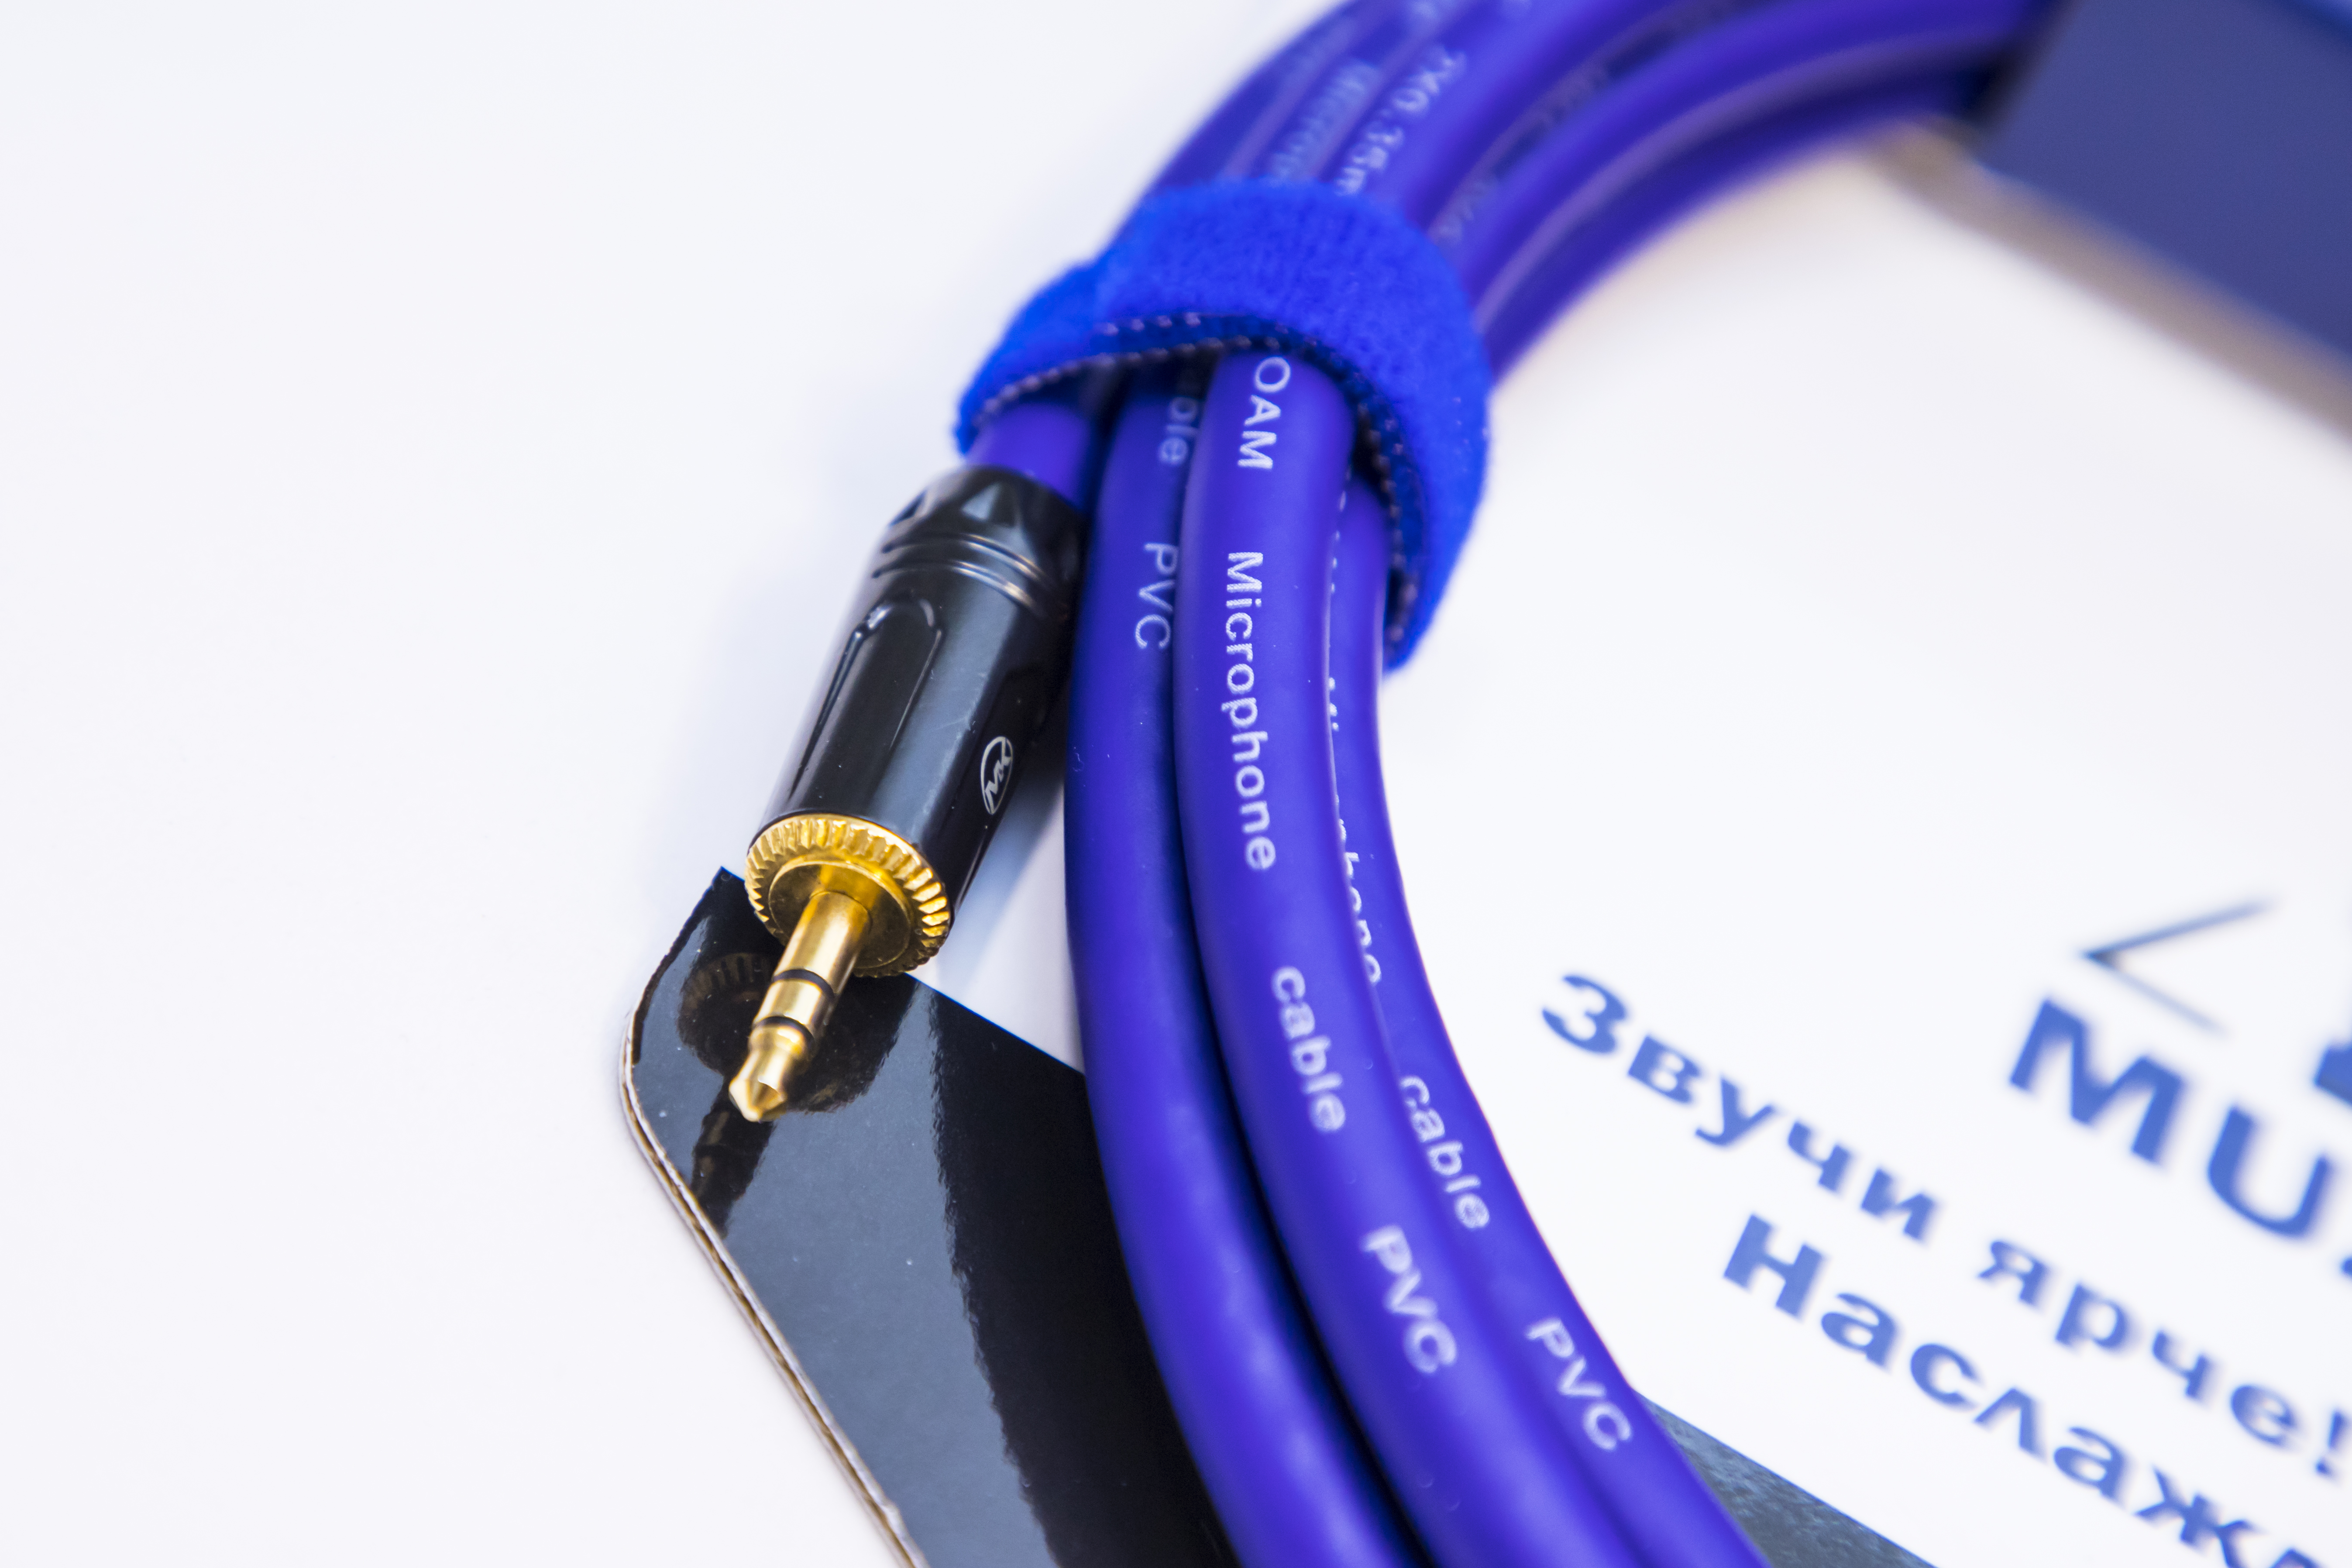 Аудио кабель MUZKABEL MFXMK1V - 1 метр, MINI JACK (3.5) - MINI JACK (3.5)